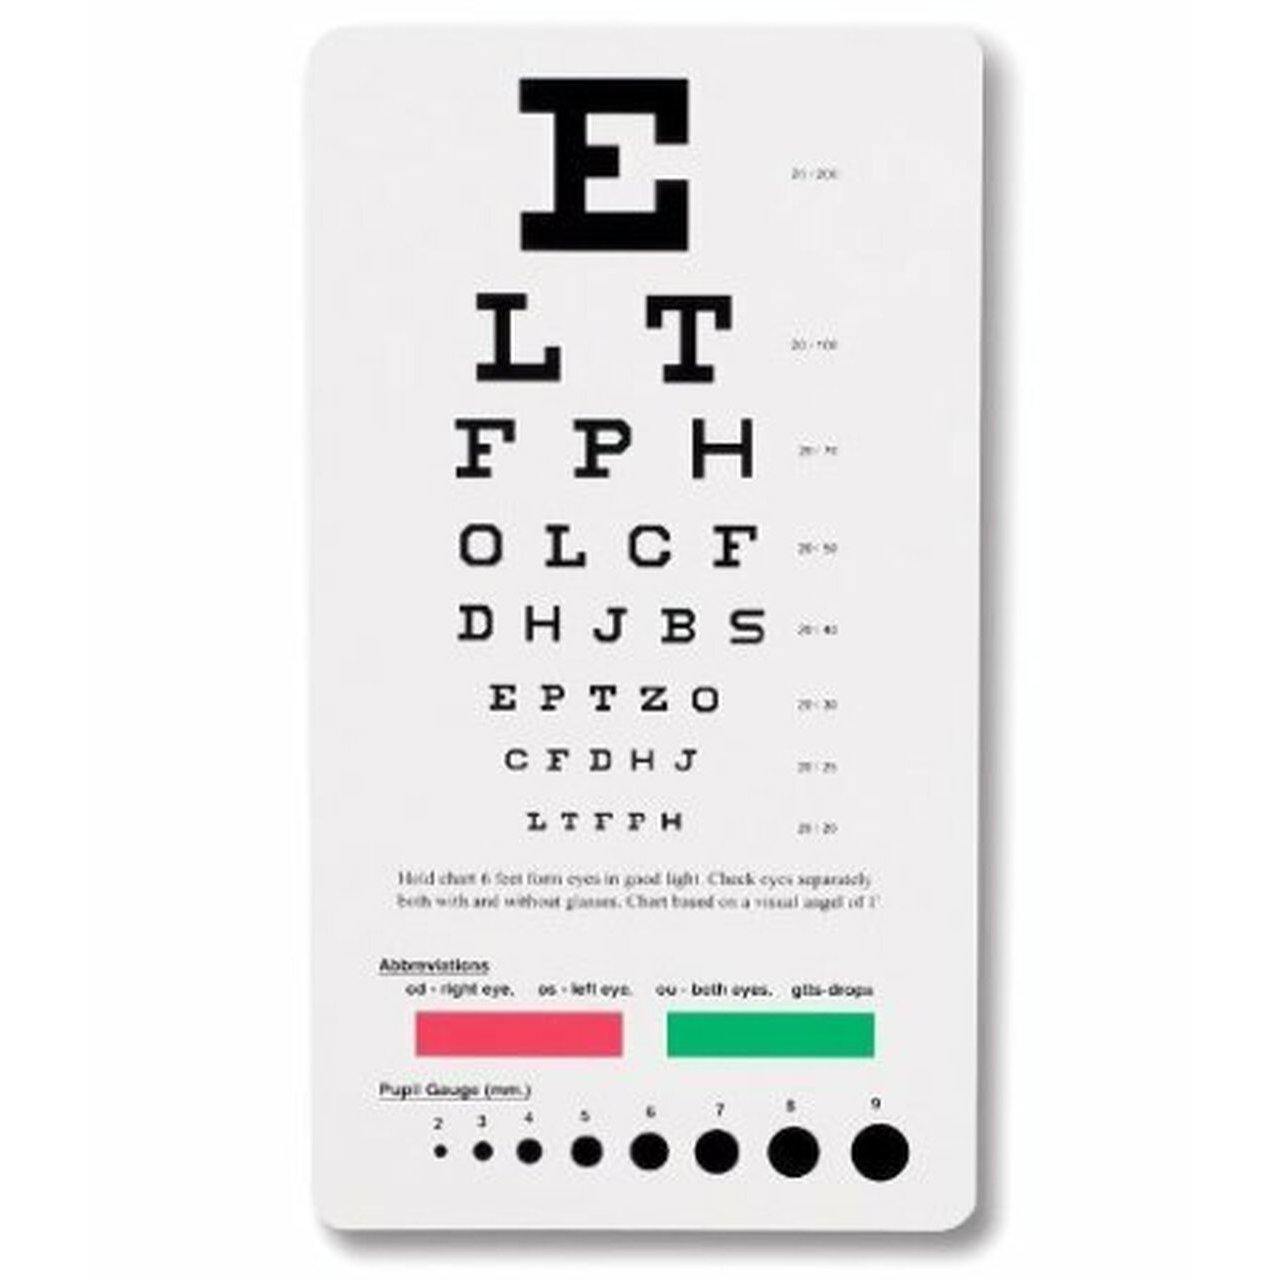 MDF® Instruments  Snellen Pocket Eye Chart